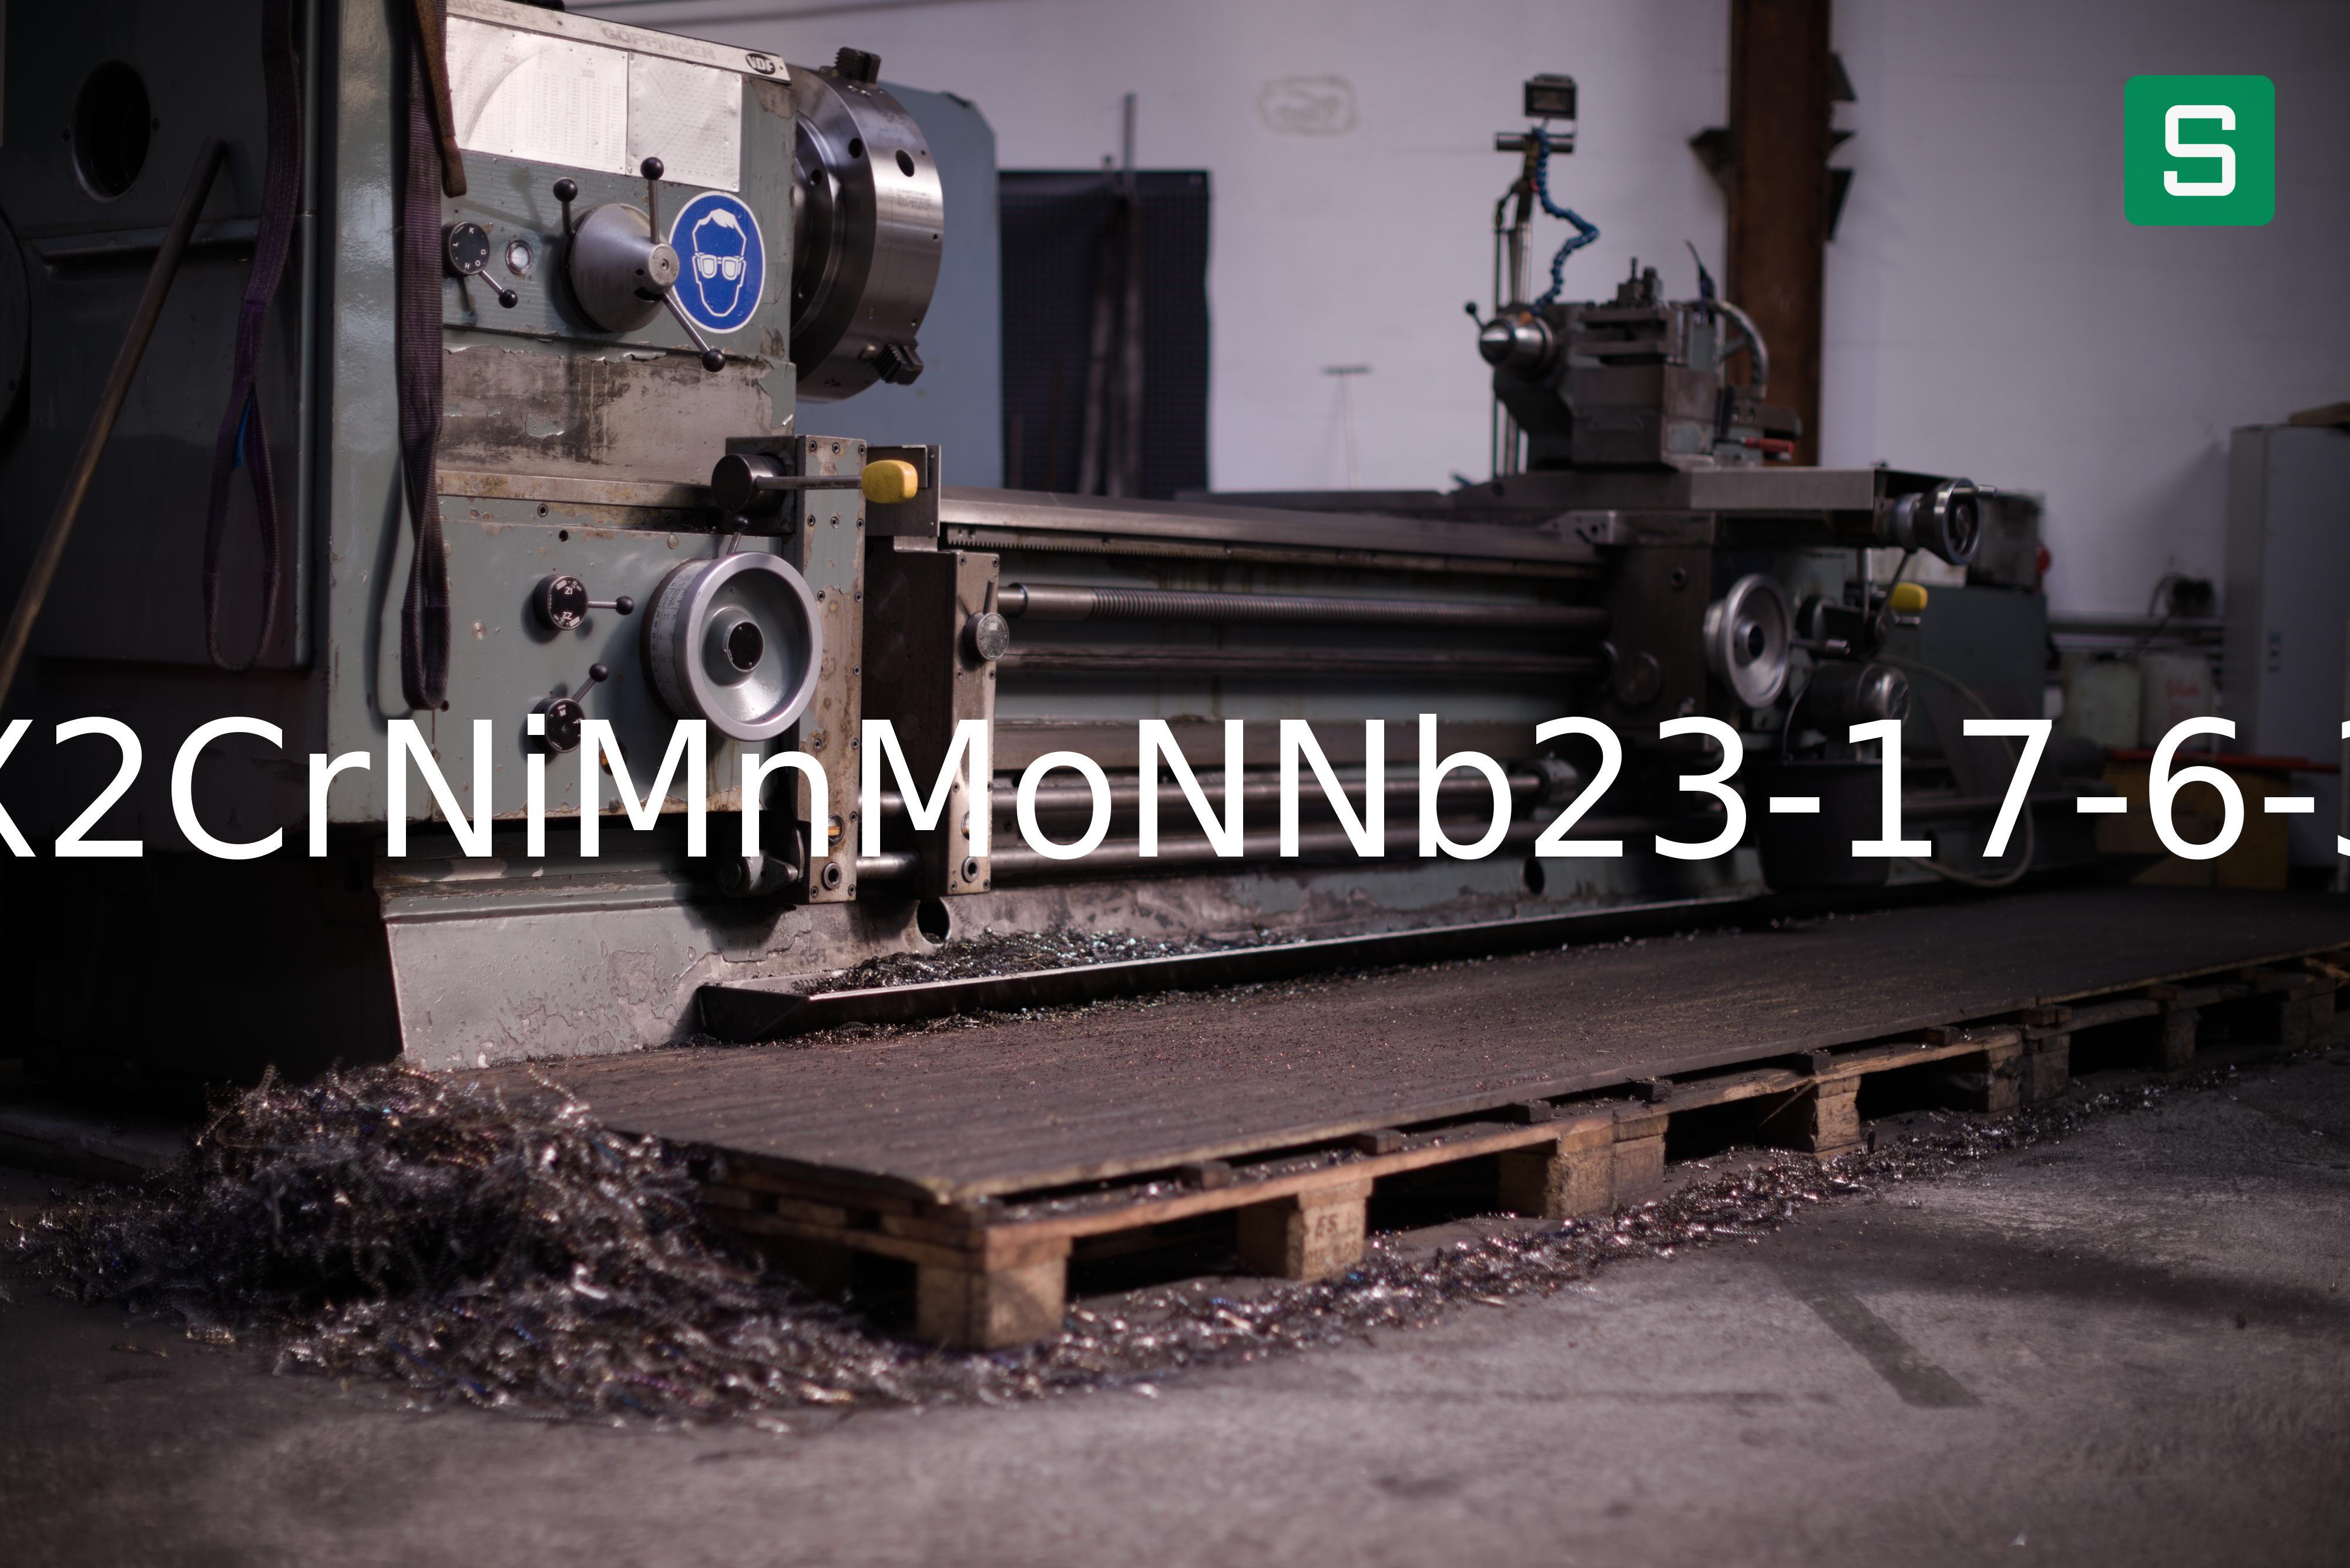 Steel Material: X2CrNiMnMoNNb23-17-6-3